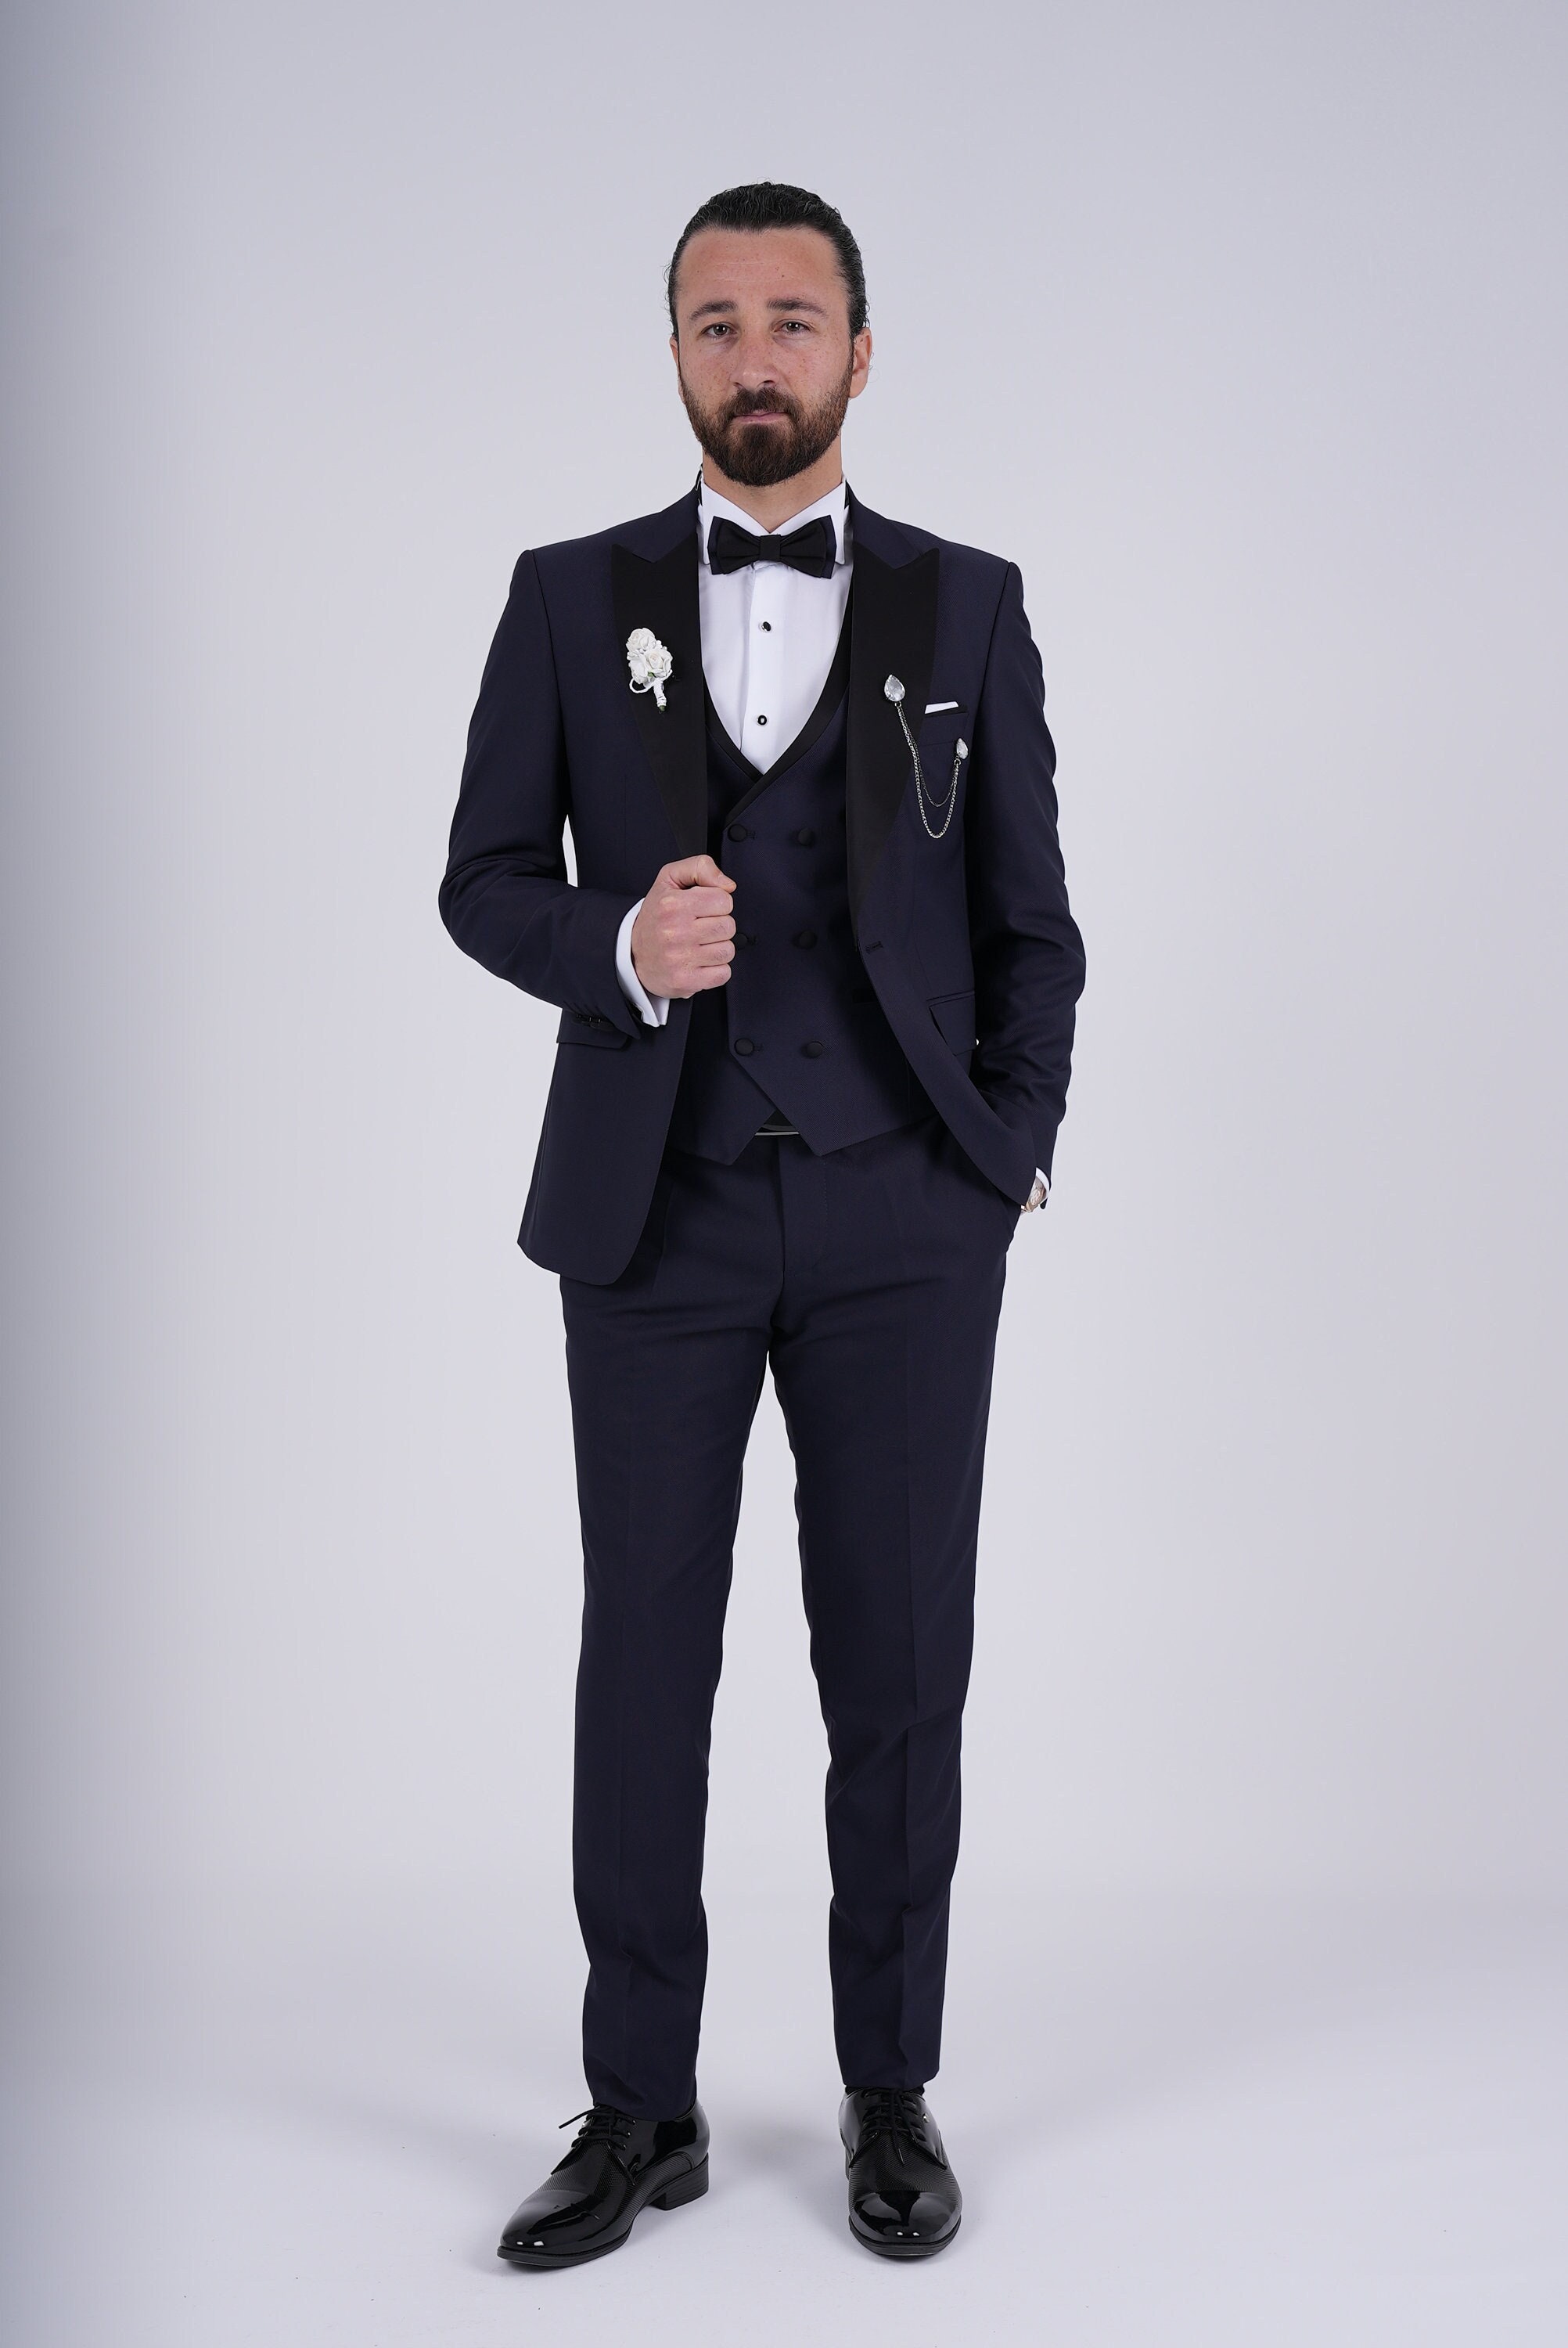 PAREZ Slim Fit Tuxedo Jacket Vest Pants-navy Blue wedding - Etsy